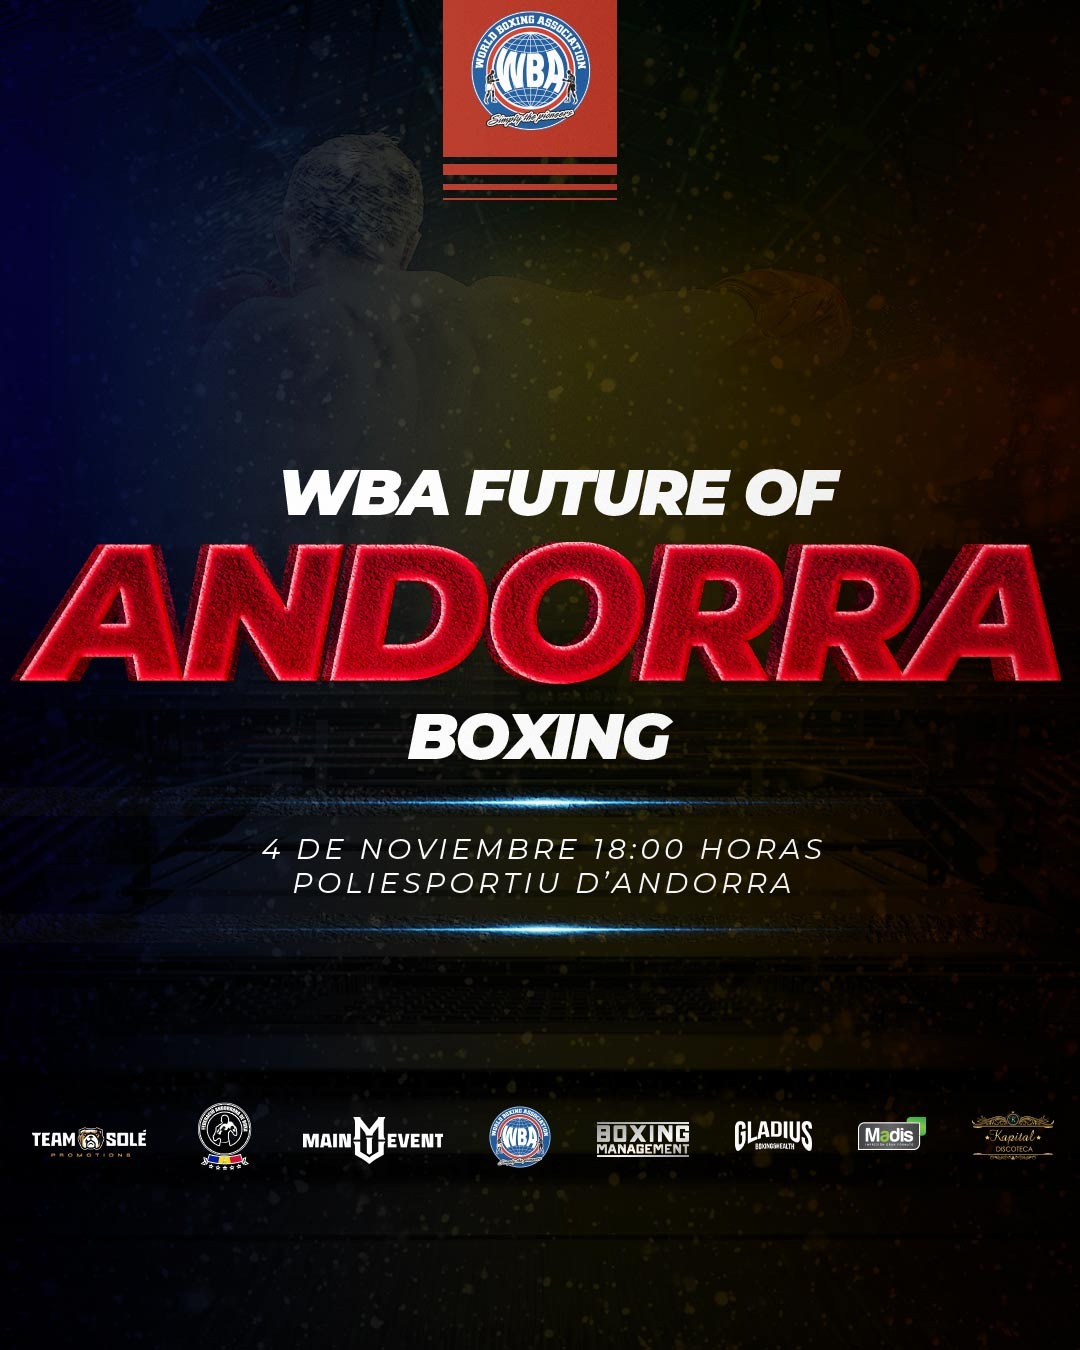 WBA Future arrives in Andorra